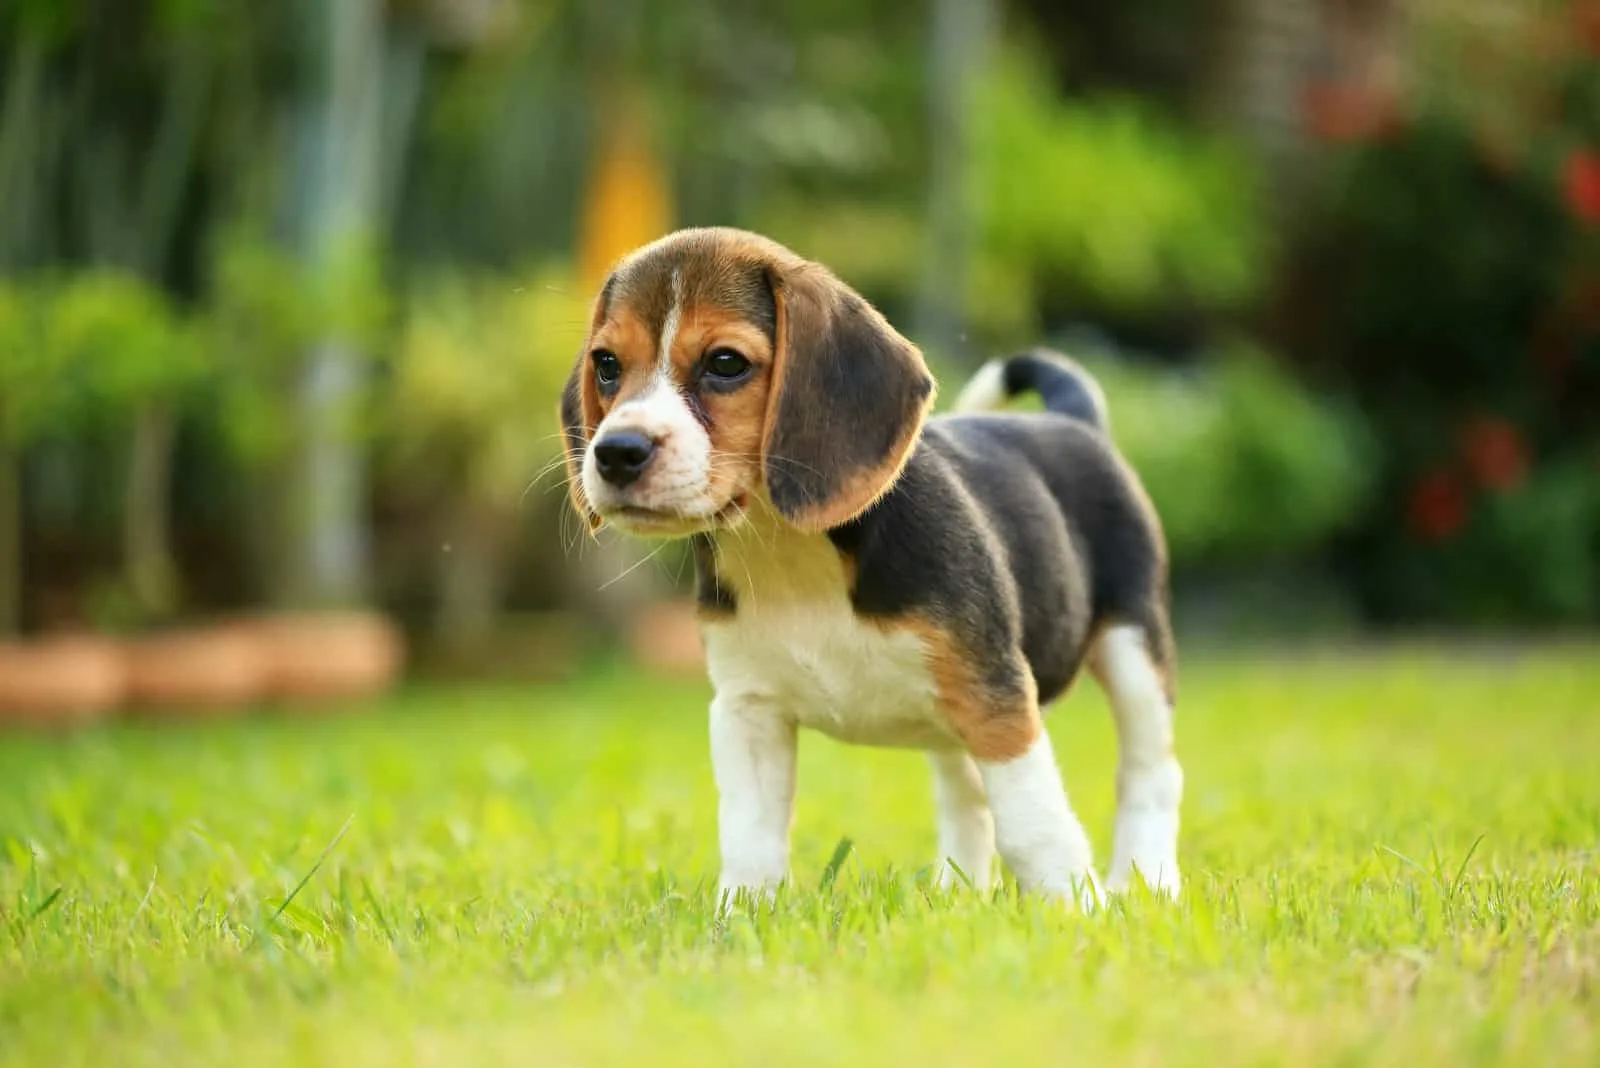 Beagle puppy walking on grass